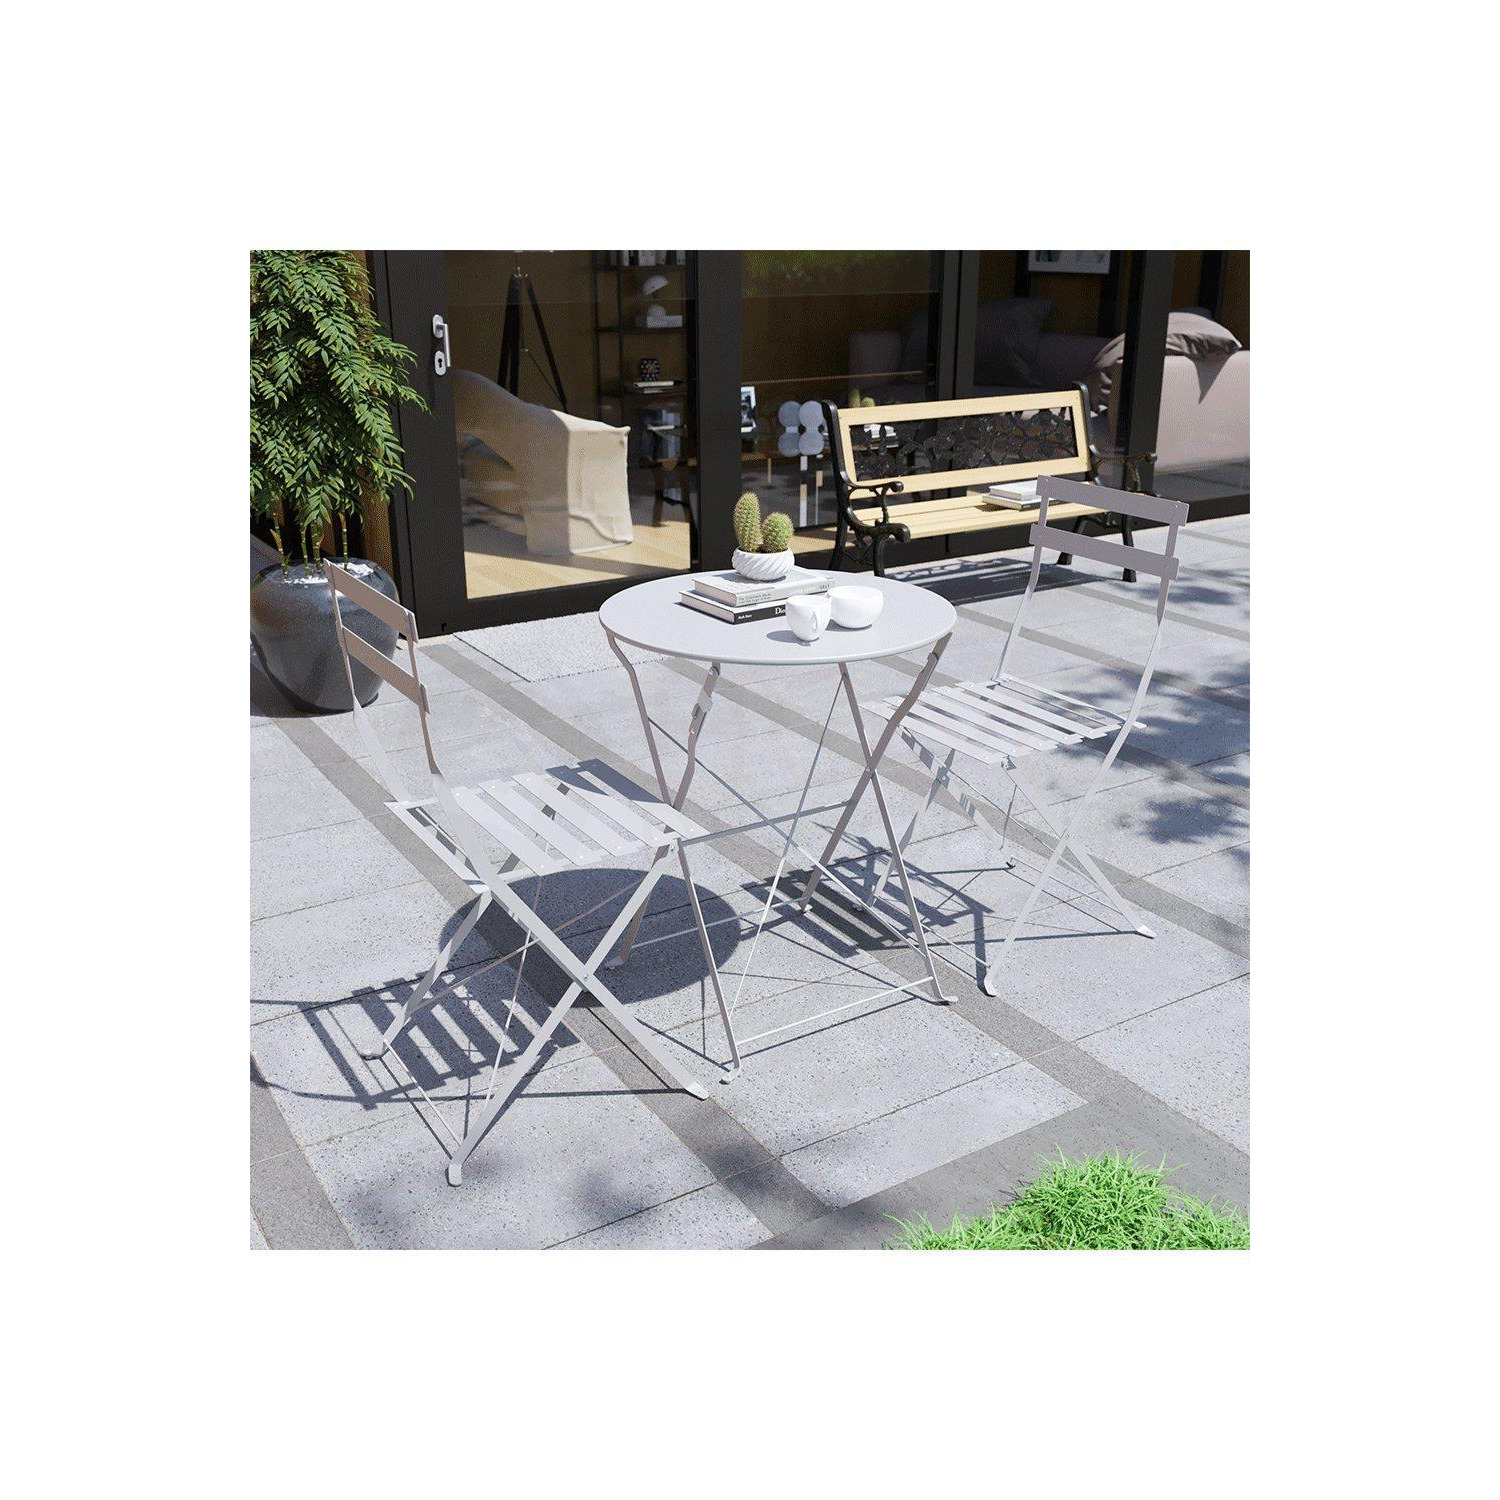 Garden Vida Porto 2 Seater Metal Bistro Set Garden Furniture - 2 Chairs and Table - image 1